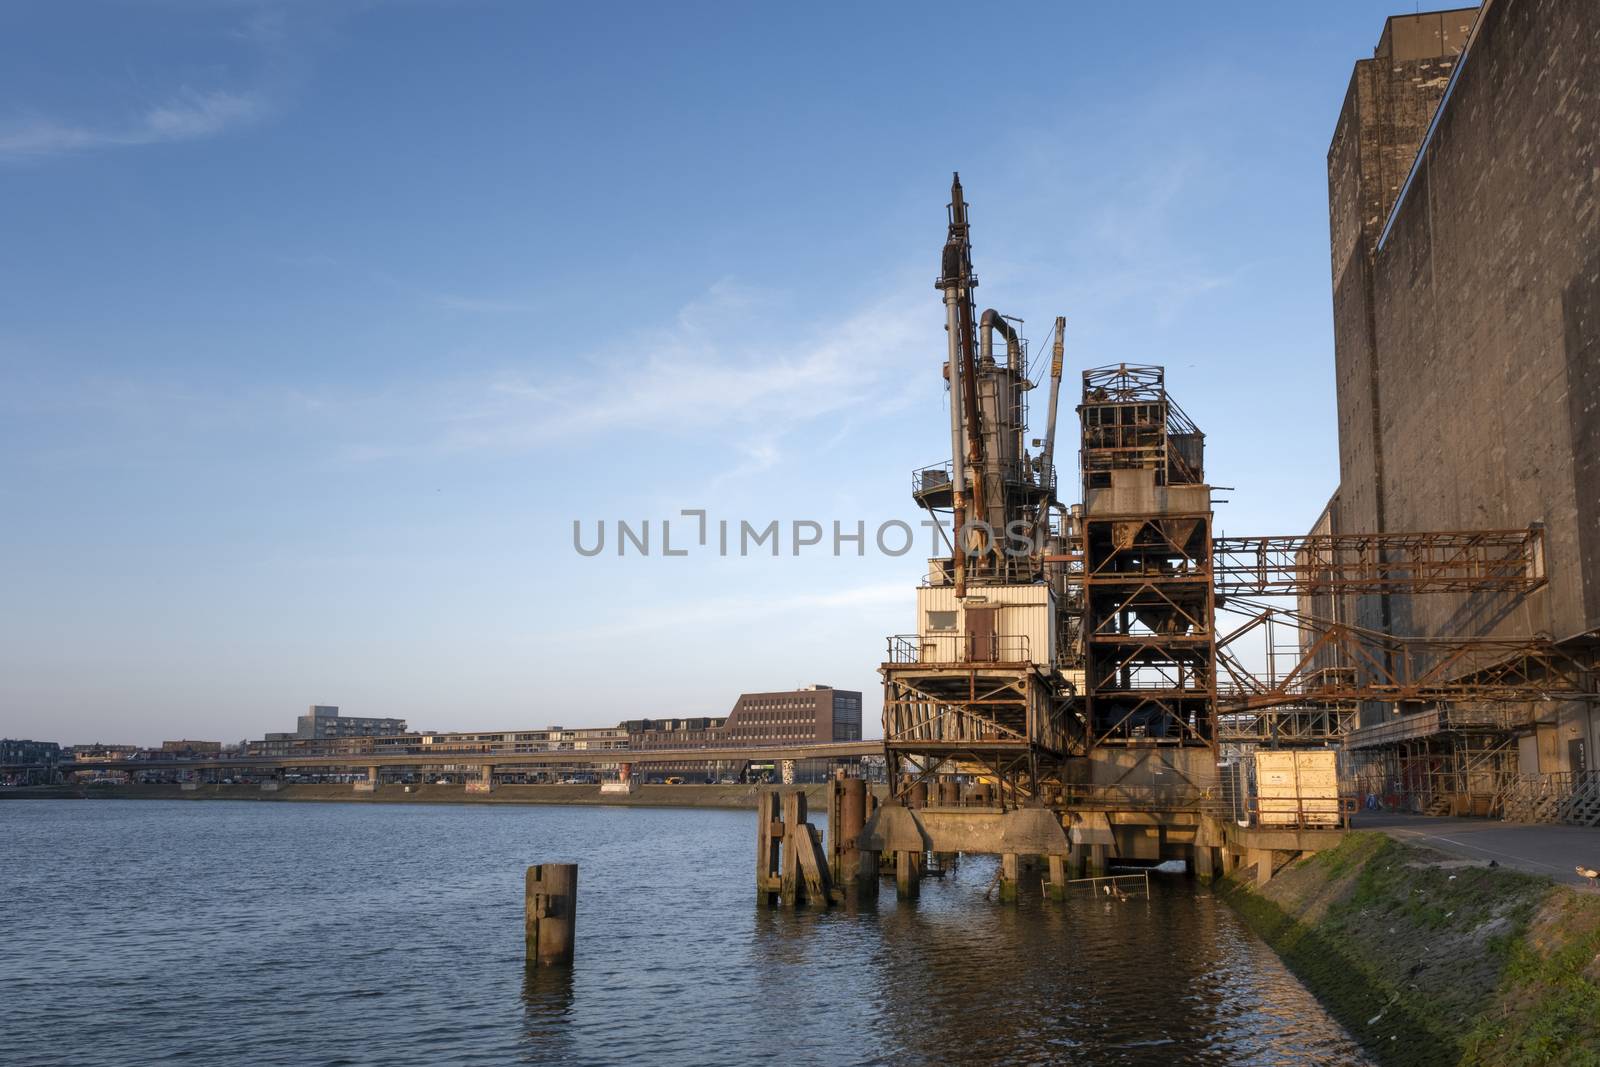 old fashion rusty Port grain elevator. Industrial sea trading po by Tjeerdkruse